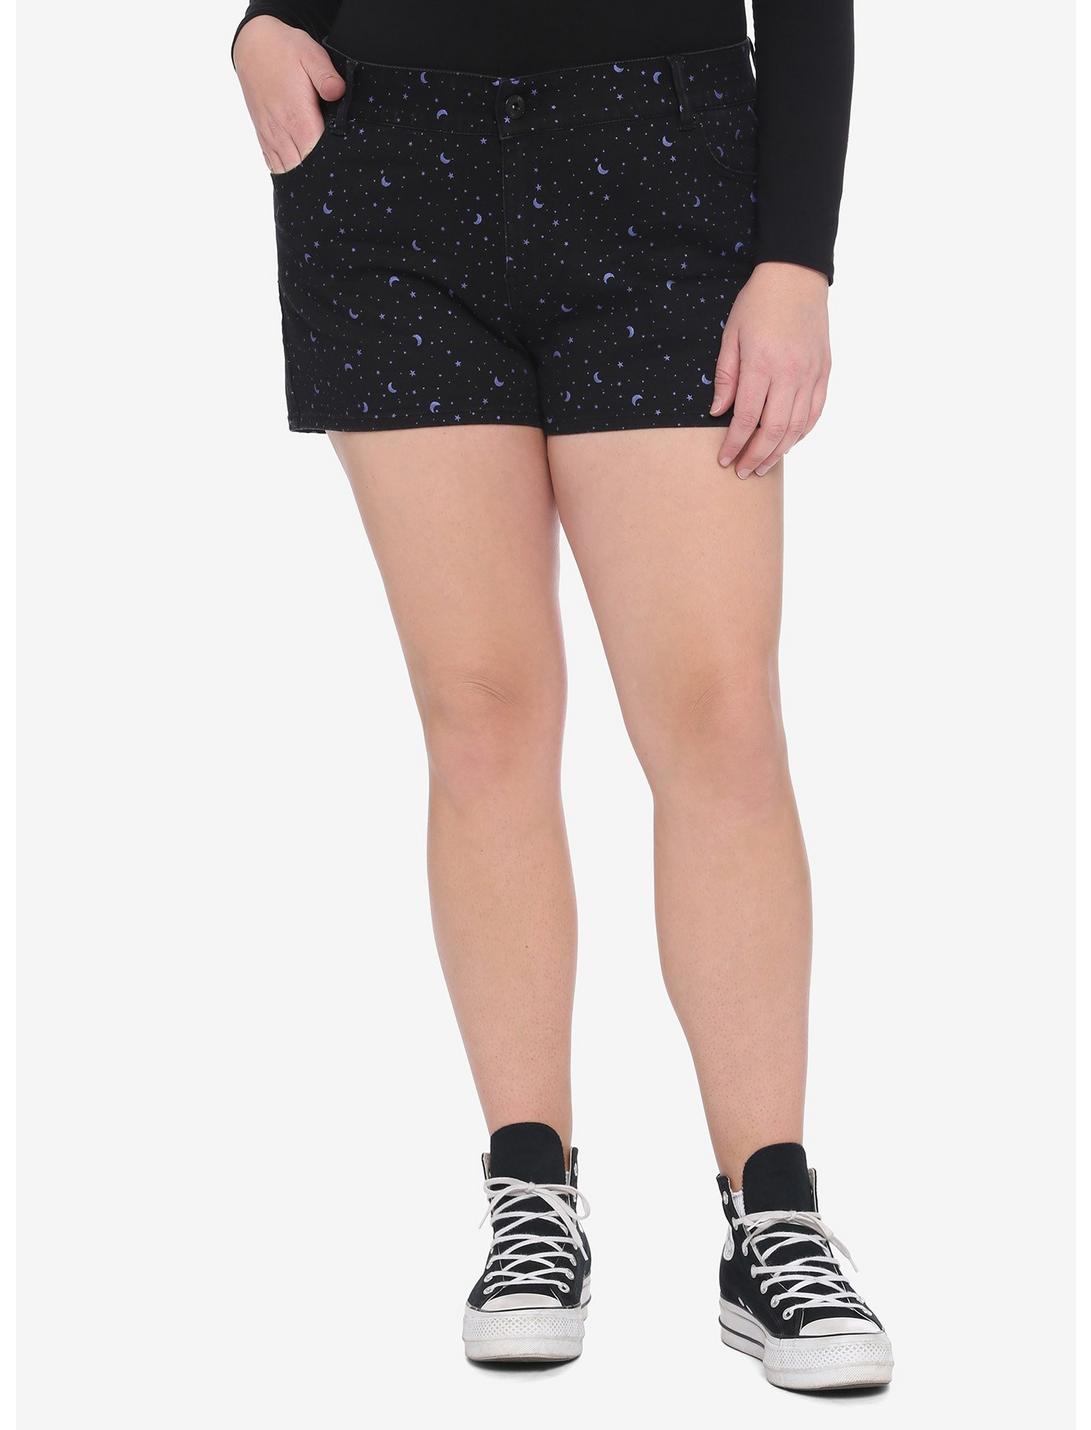 HT Denim Moon Star Ziggy Curvy High-Waisted Shorts Plus Size, CELESTIAL, hi-res